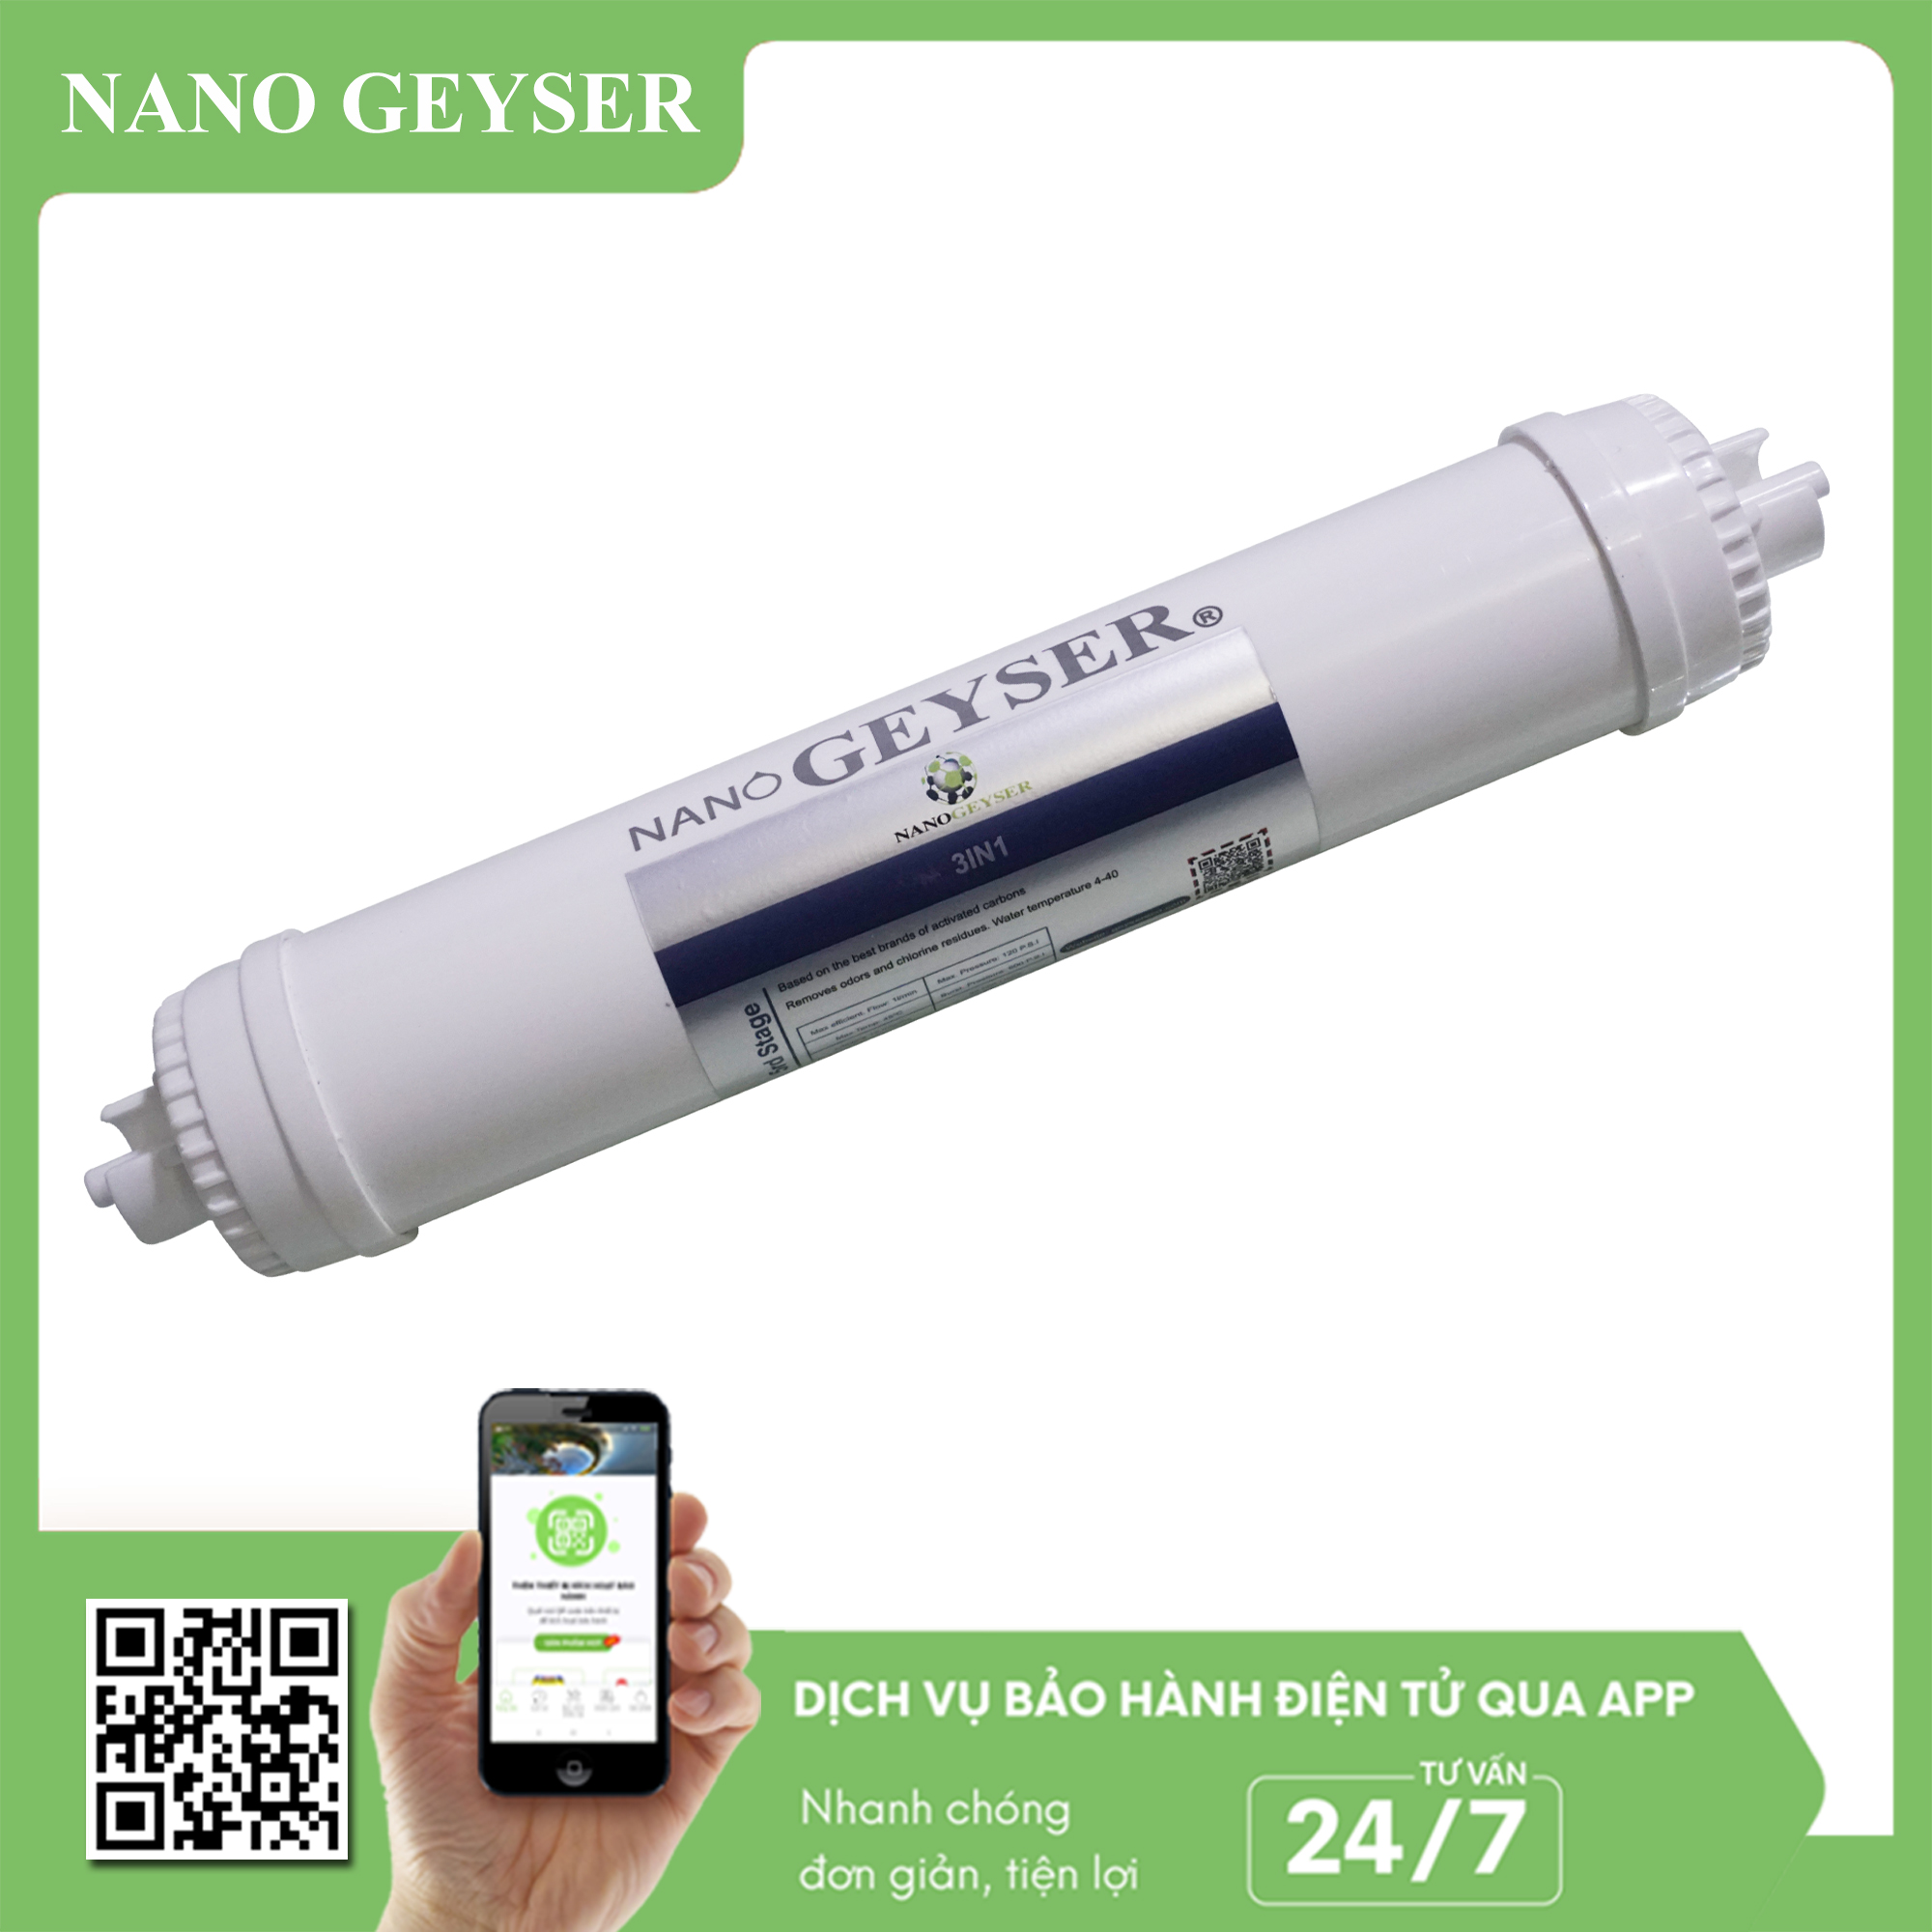 Lõi 3IN1 Filter Nano Geyser